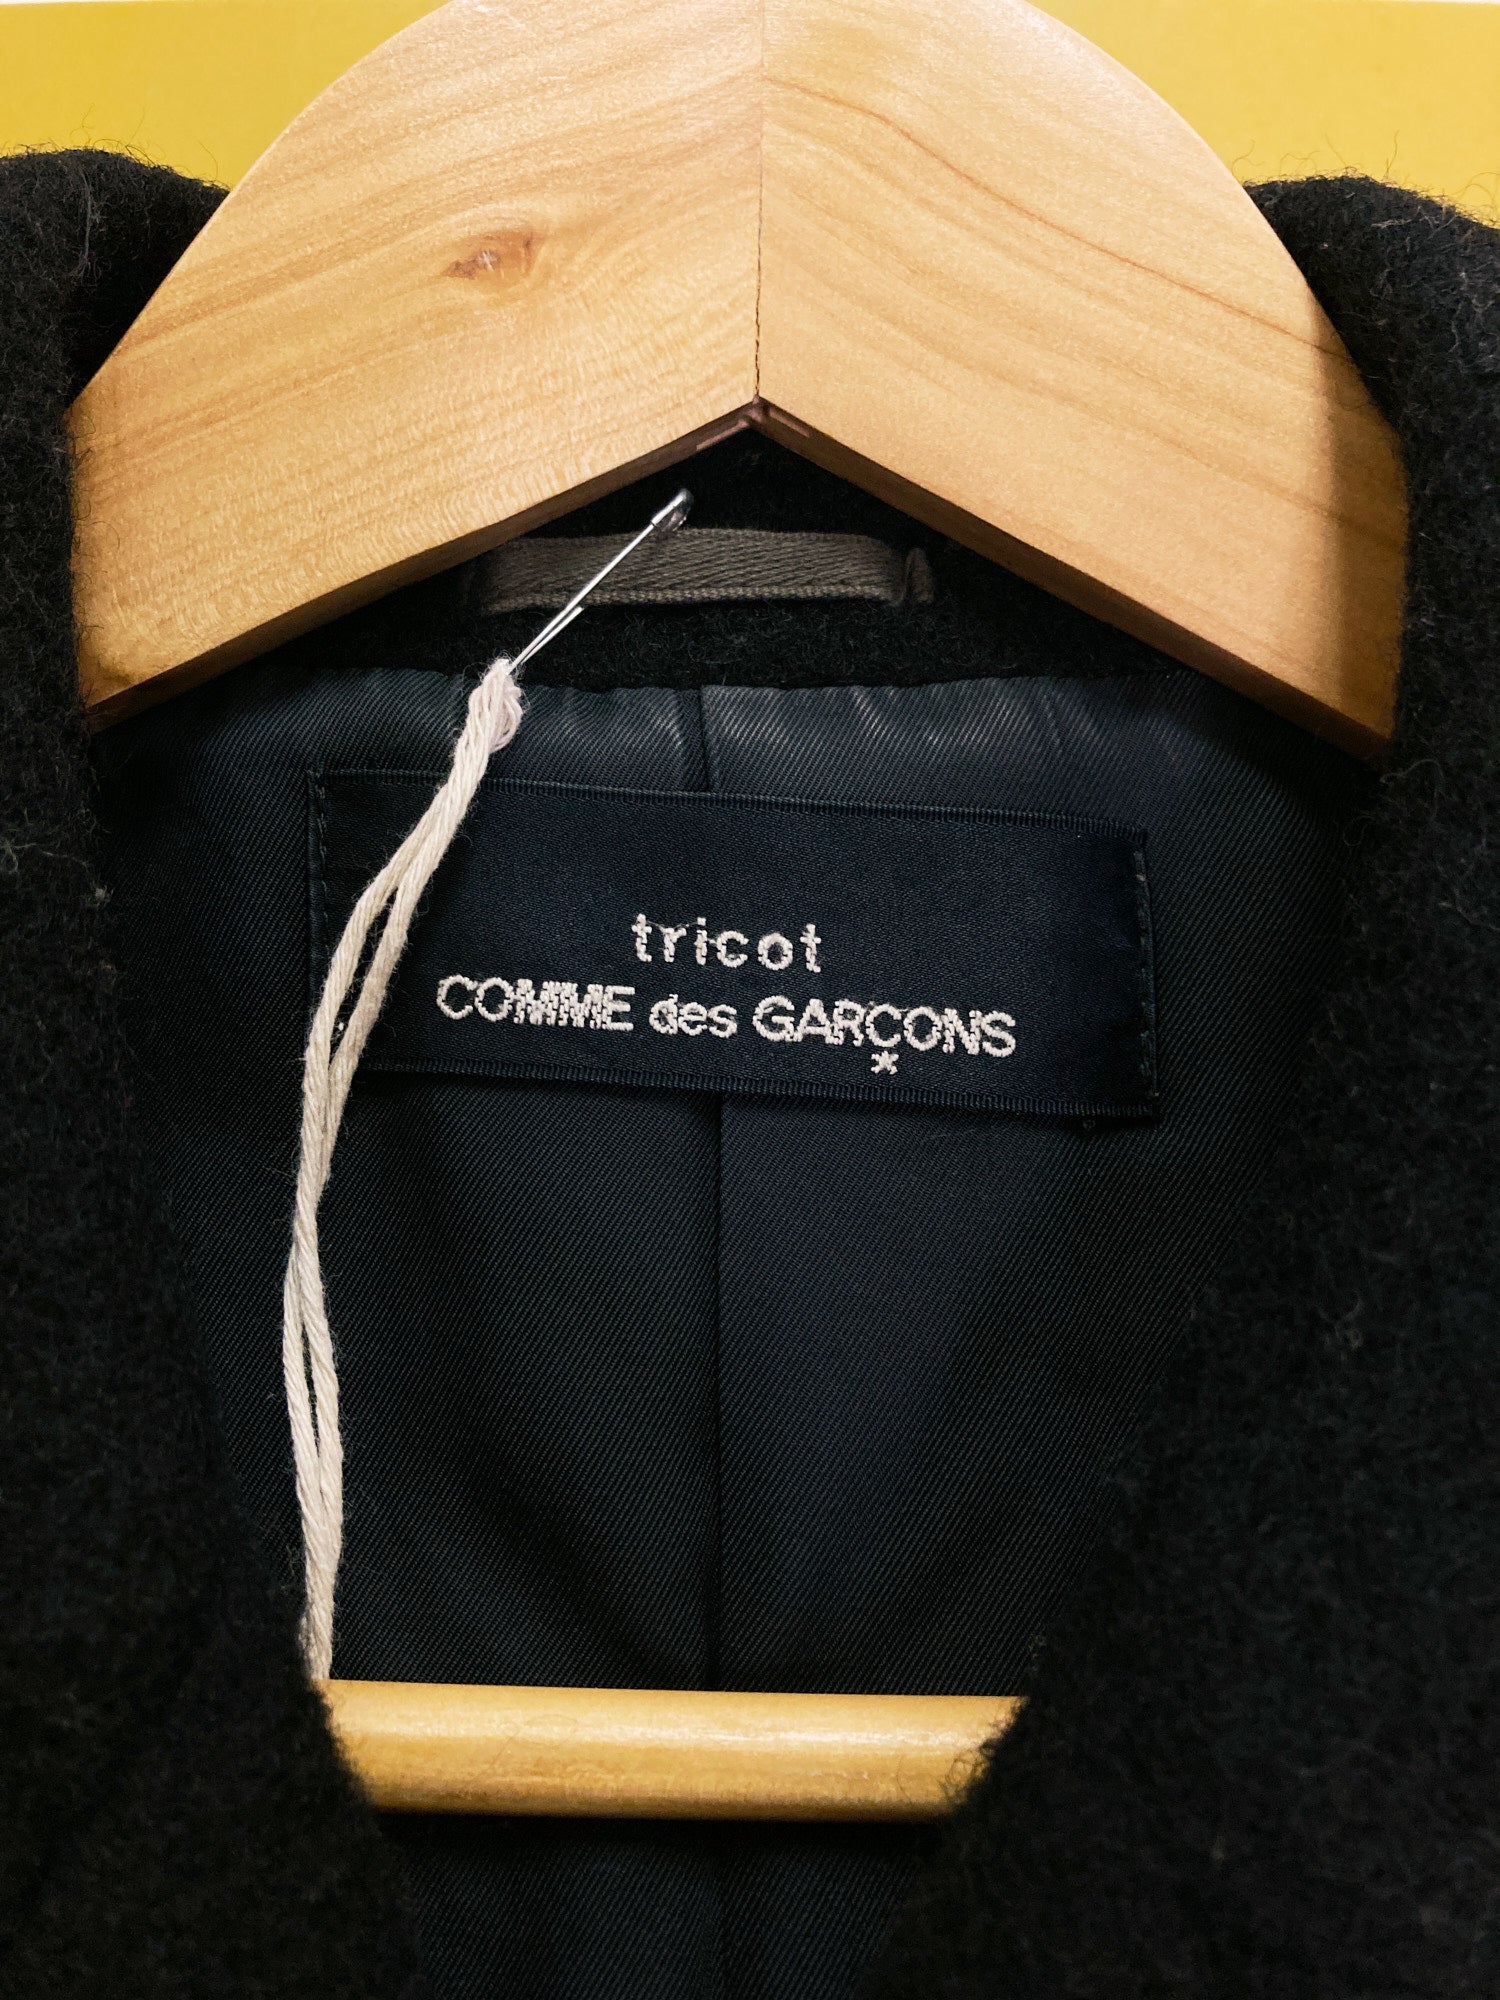 Tricot Comme des Garcons AW1995 black wool melton big button peacoat